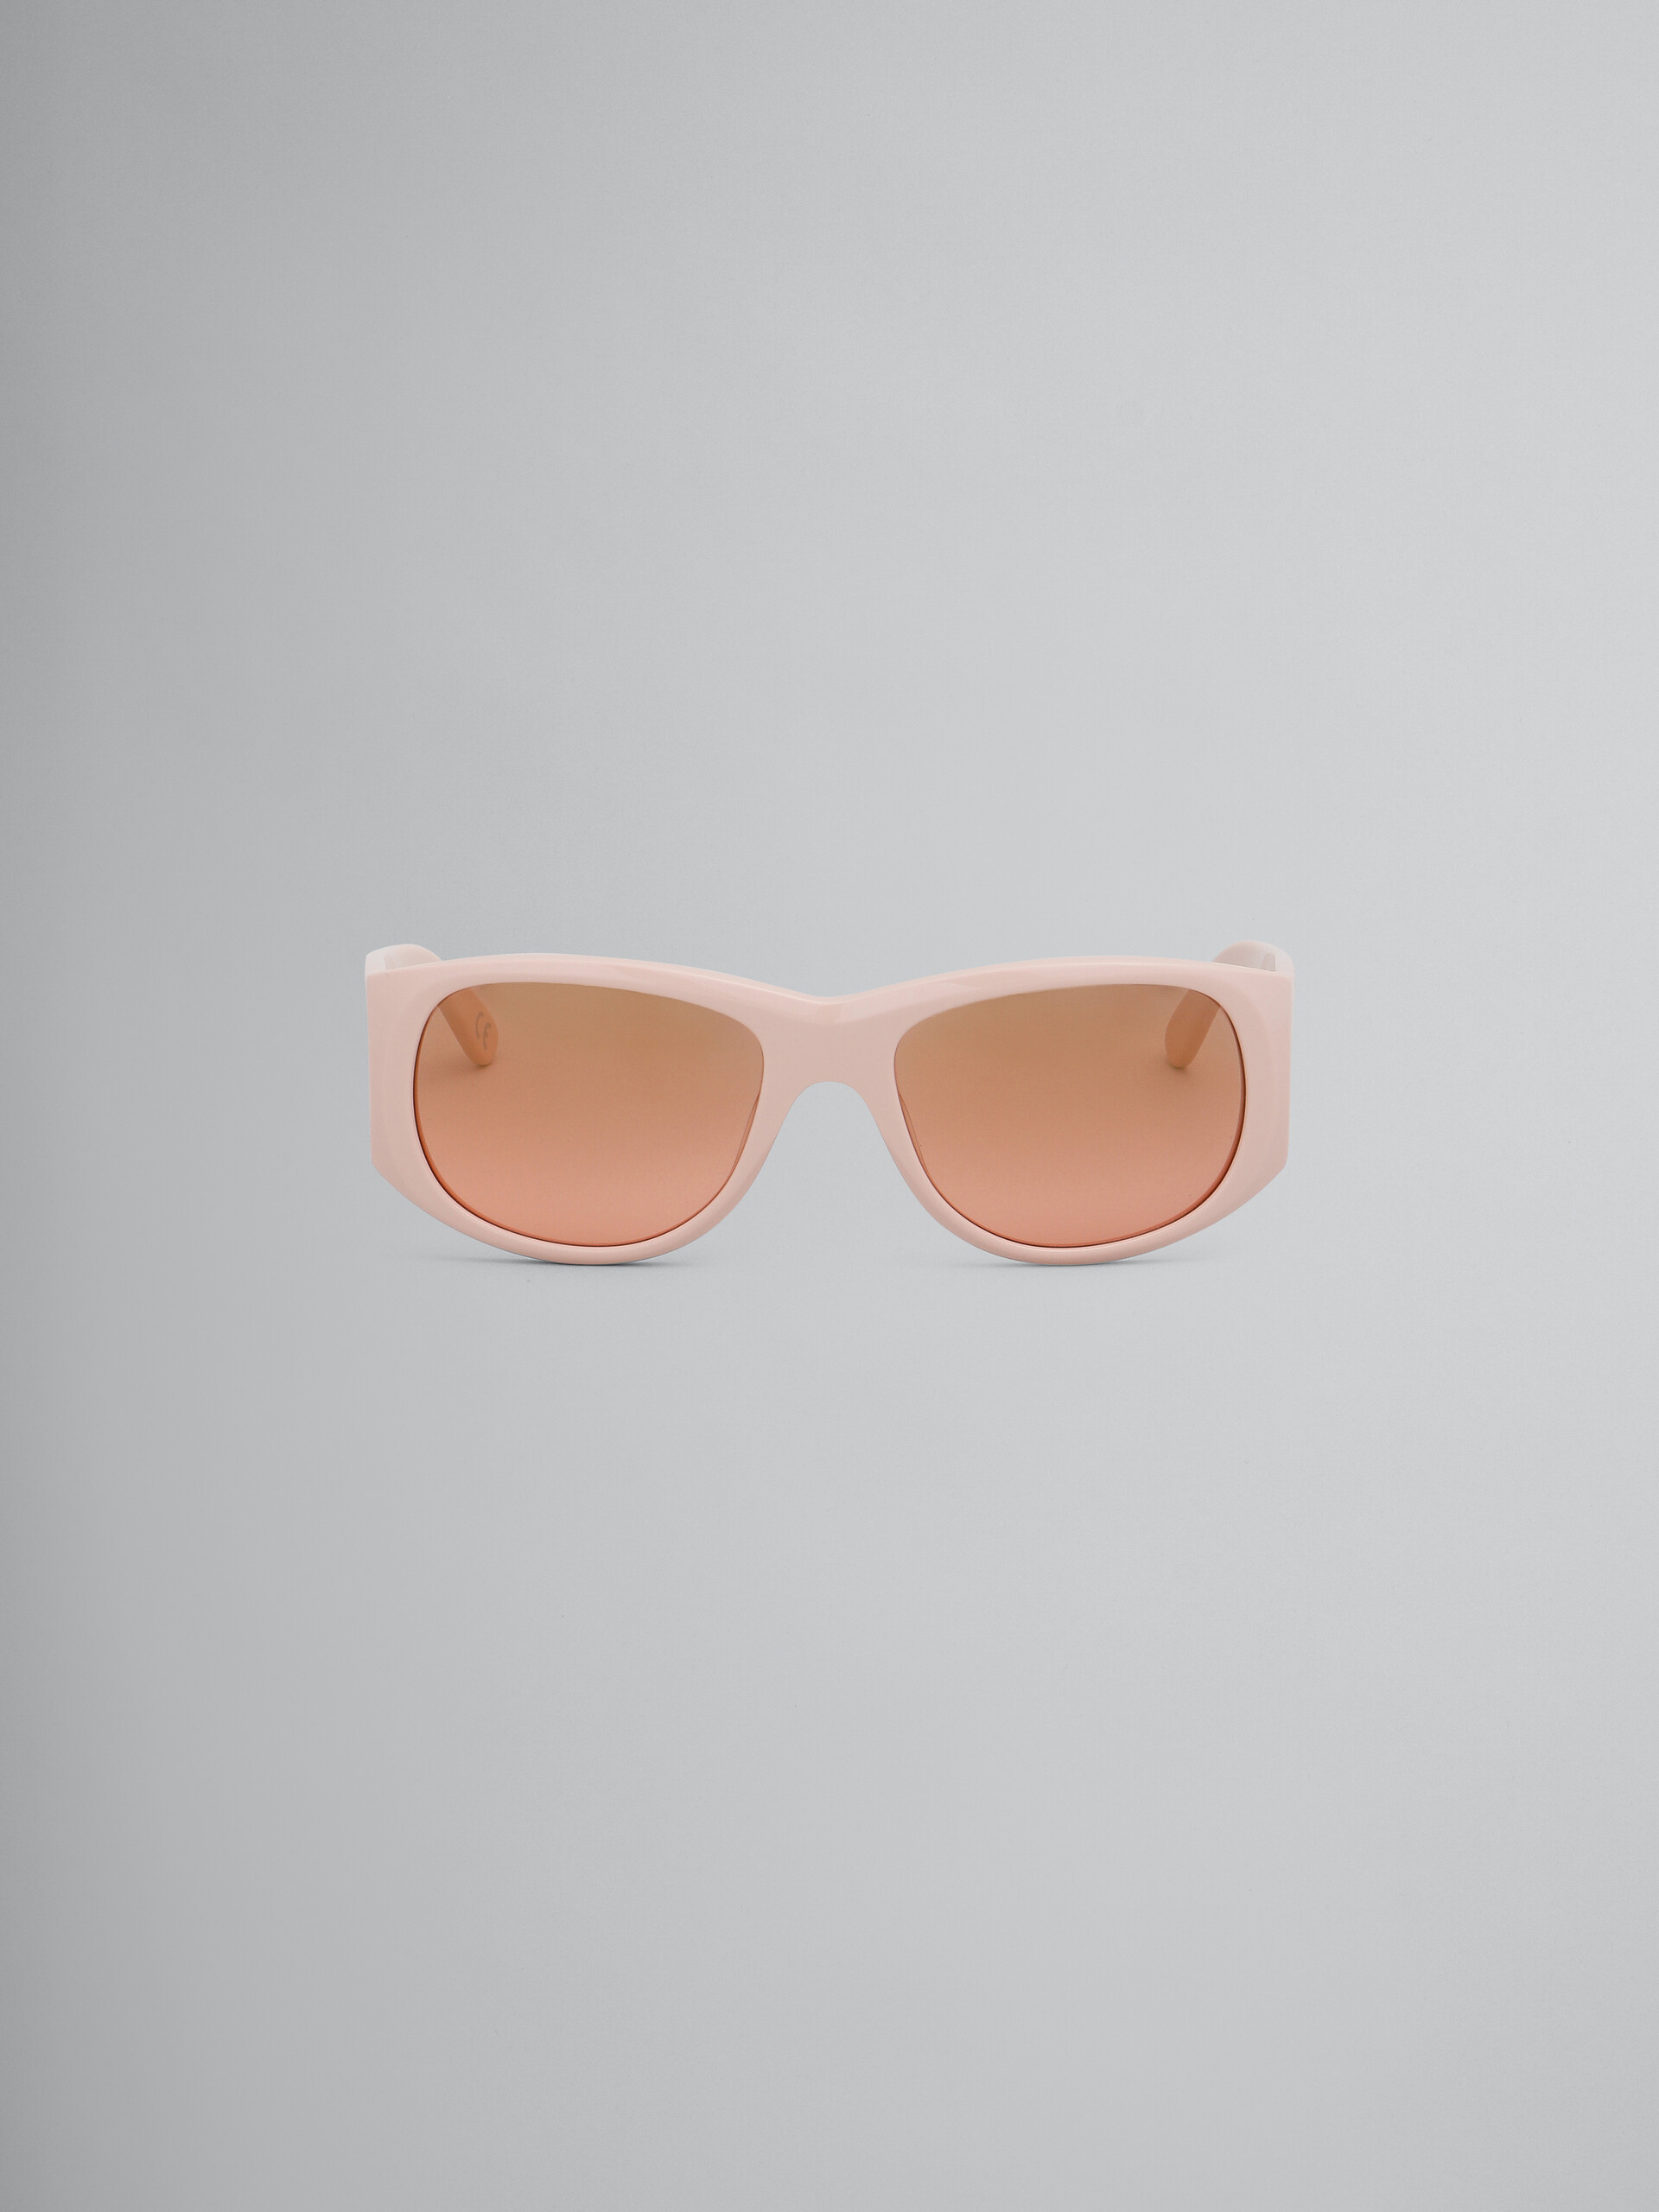 Nude Orinoco River acetate sunglasses - Optical - Image 1